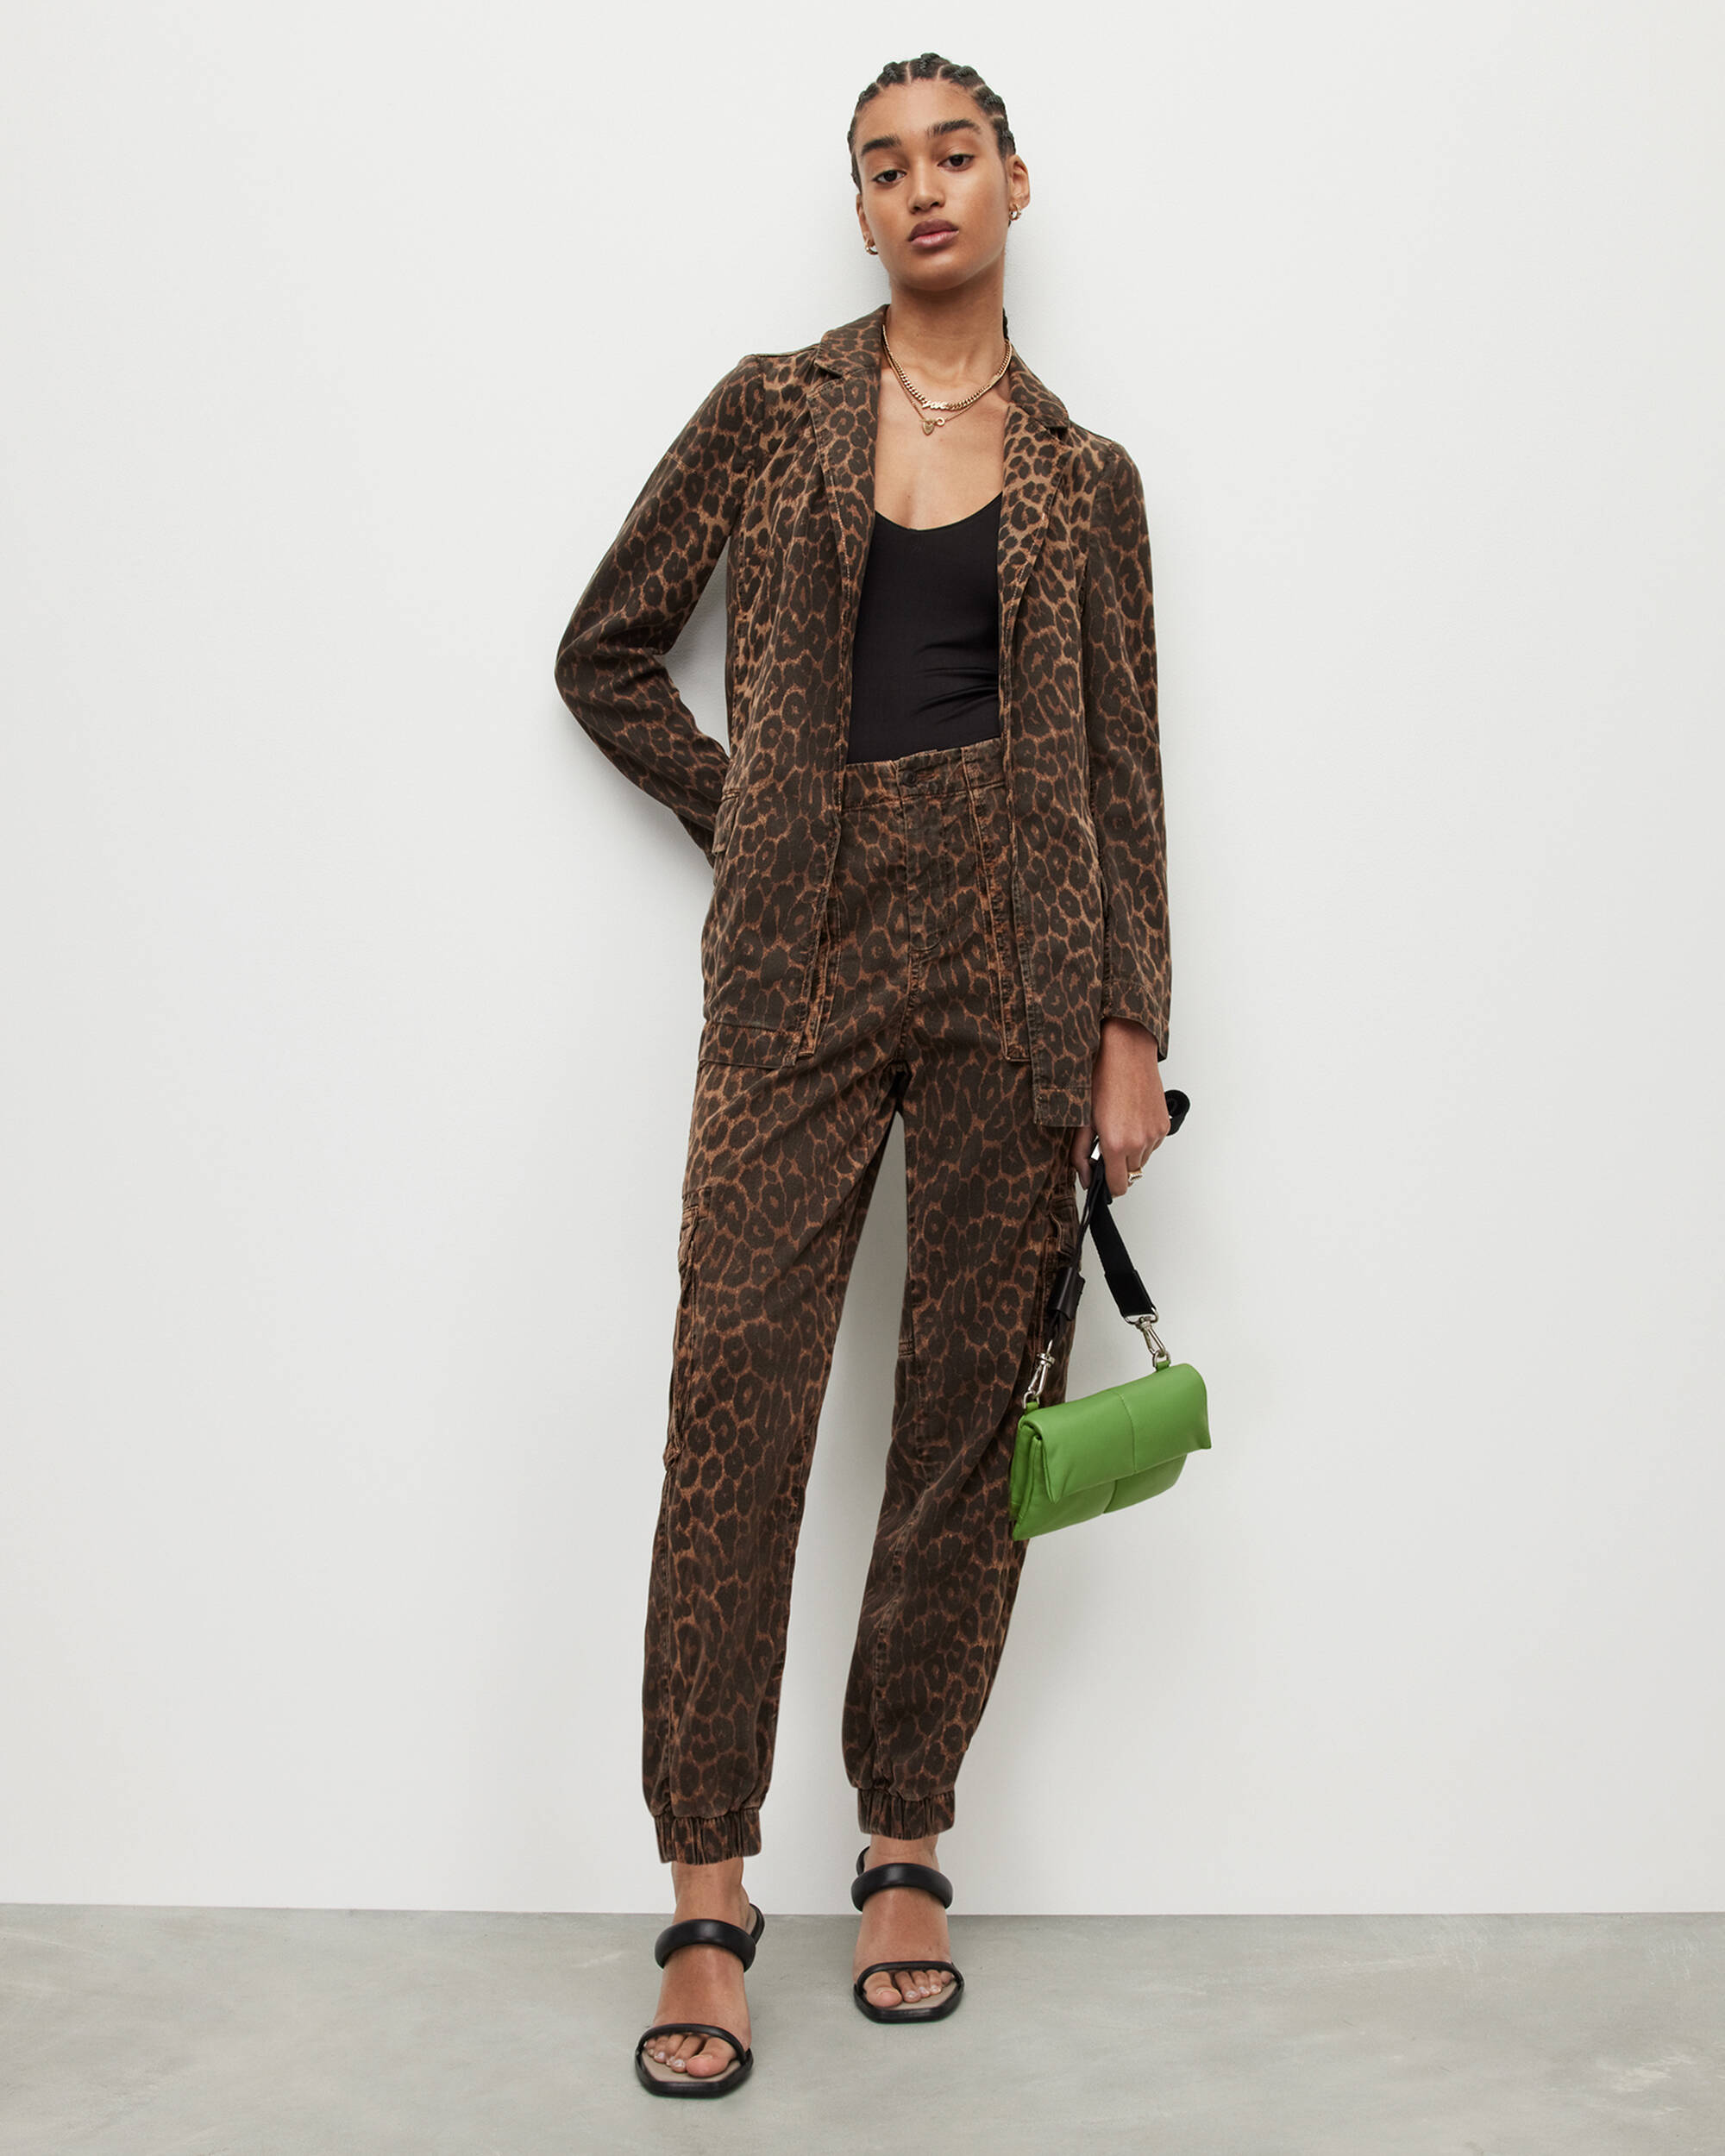 NWT Zara Cheetah print Blazer